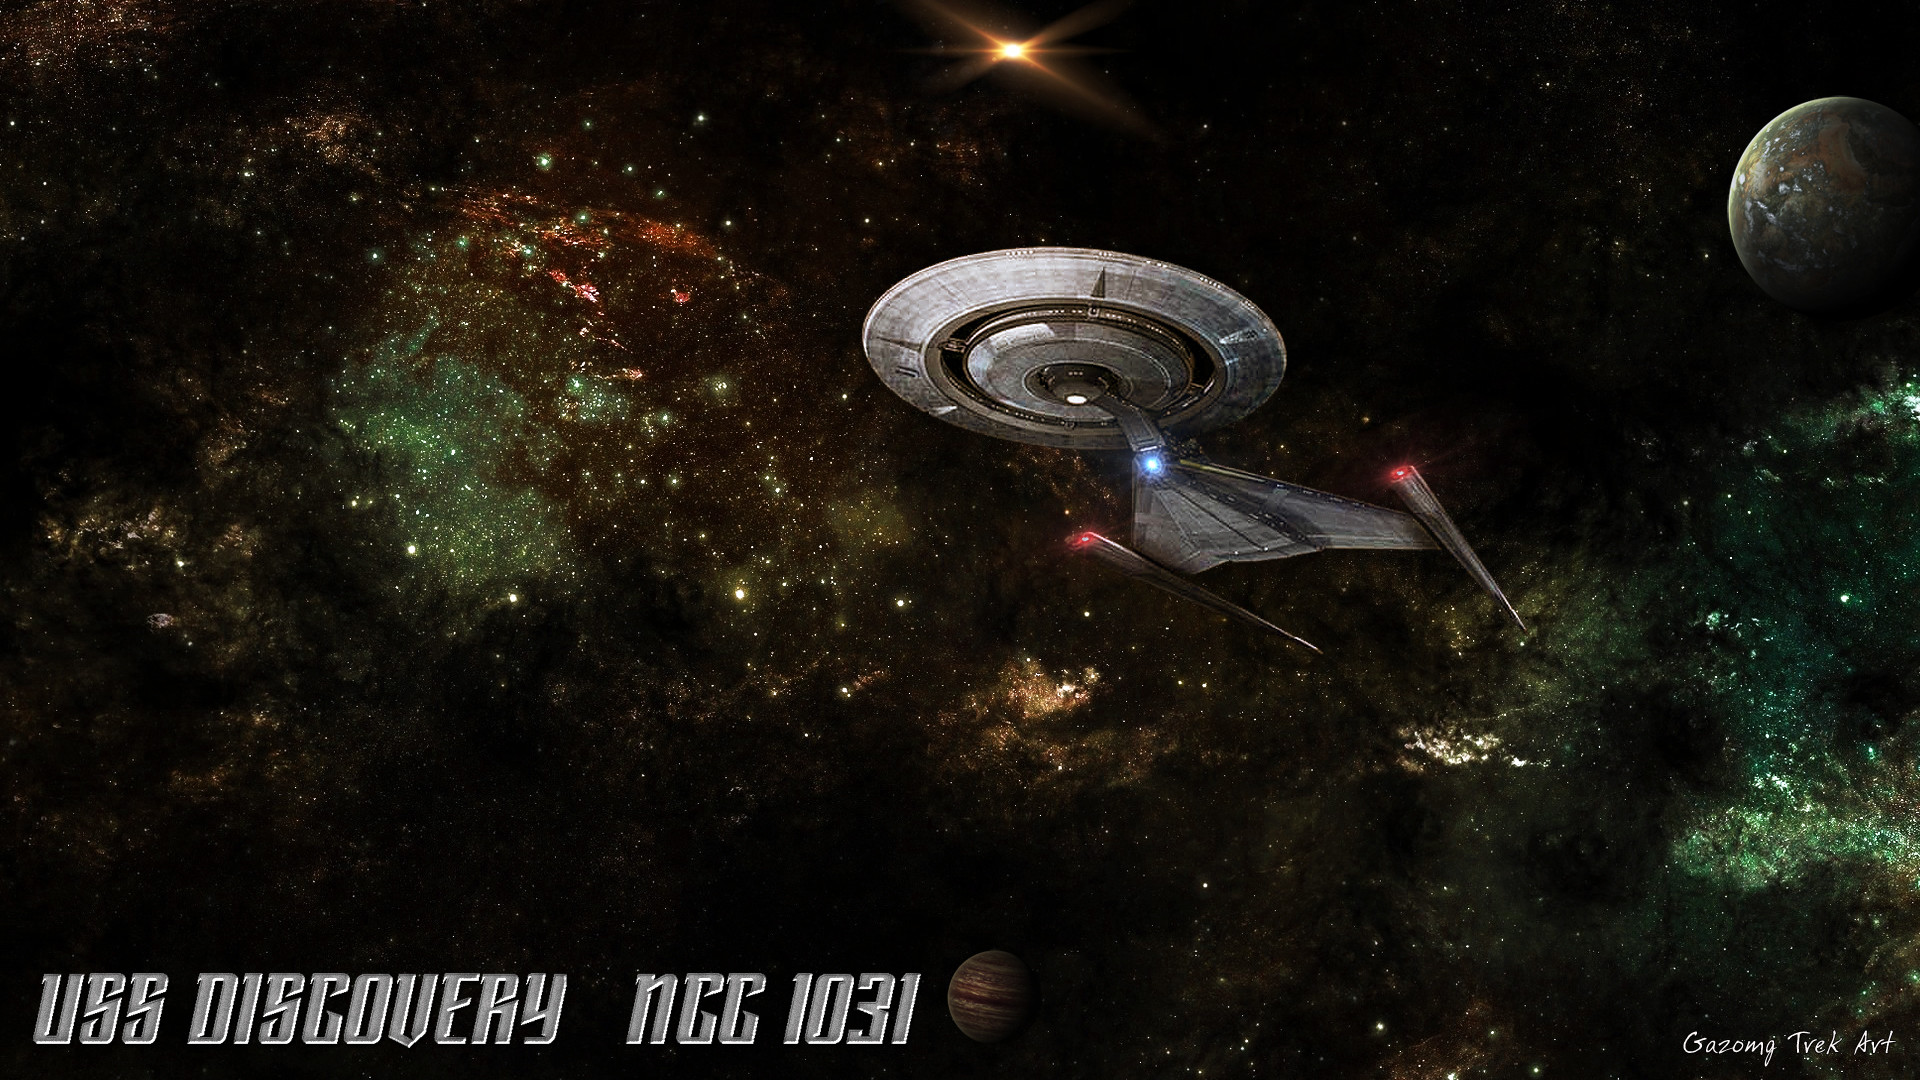 1920x1080 ... Star Trek USS Discovery NCC 1031 Wallpaper by gazomg